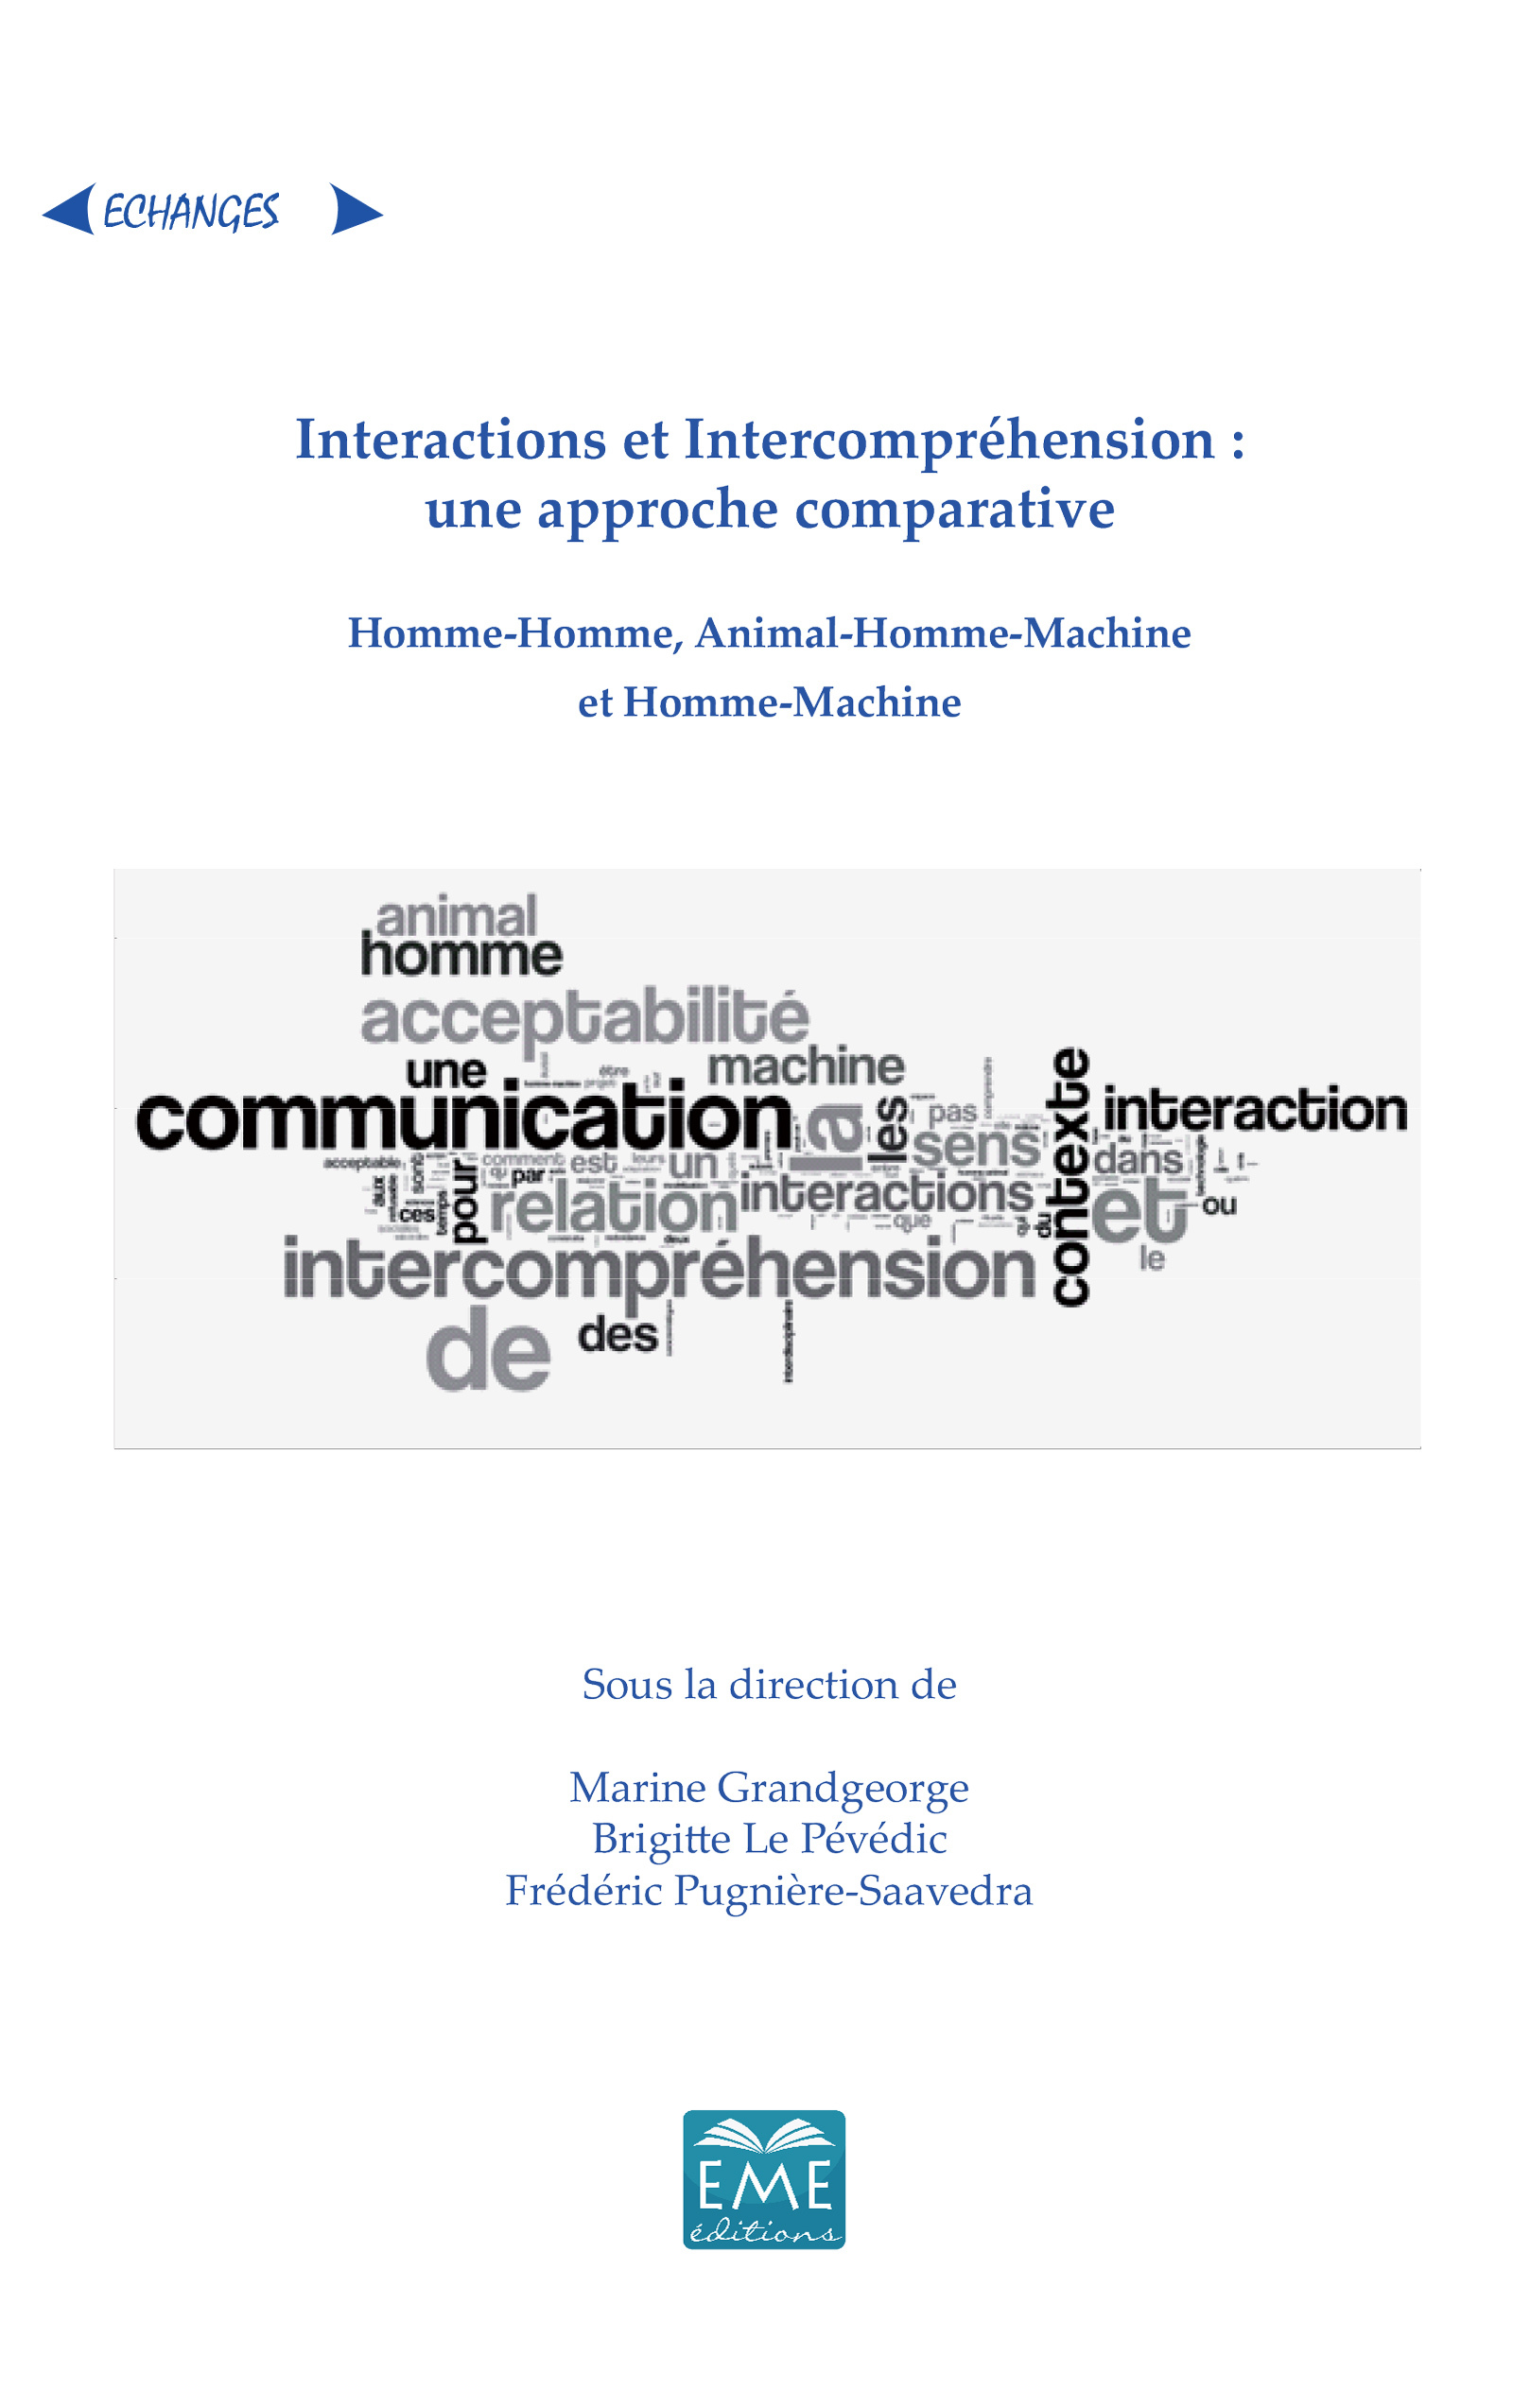 Interactions et Intercompréhension : une approche comparative, Homme-homme, animal-homme-machine et homme-machine (9782806608550-front-cover)